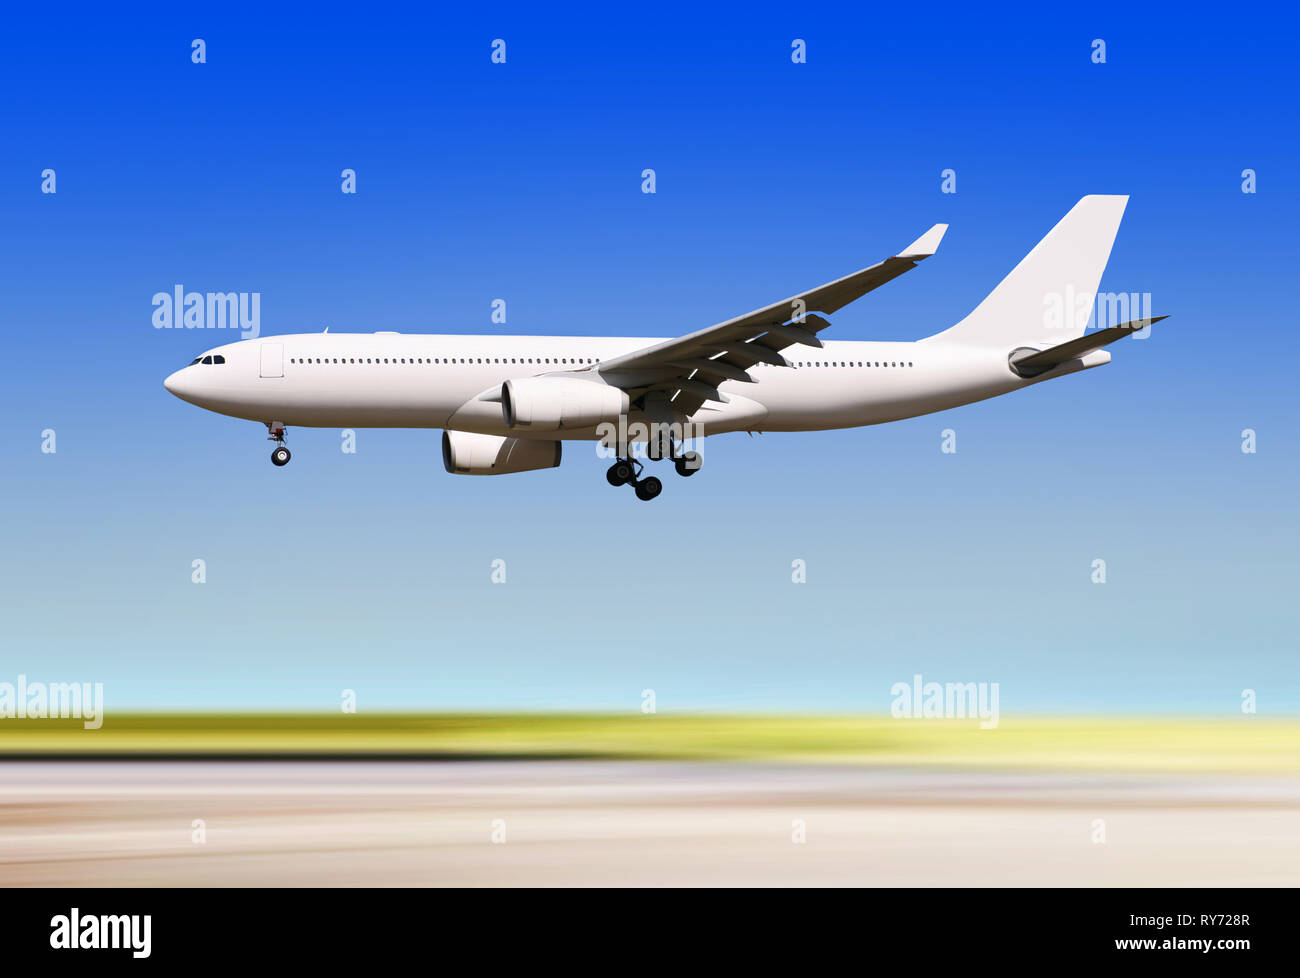 big passenger airplane is landing to runway of airport Stock Photo